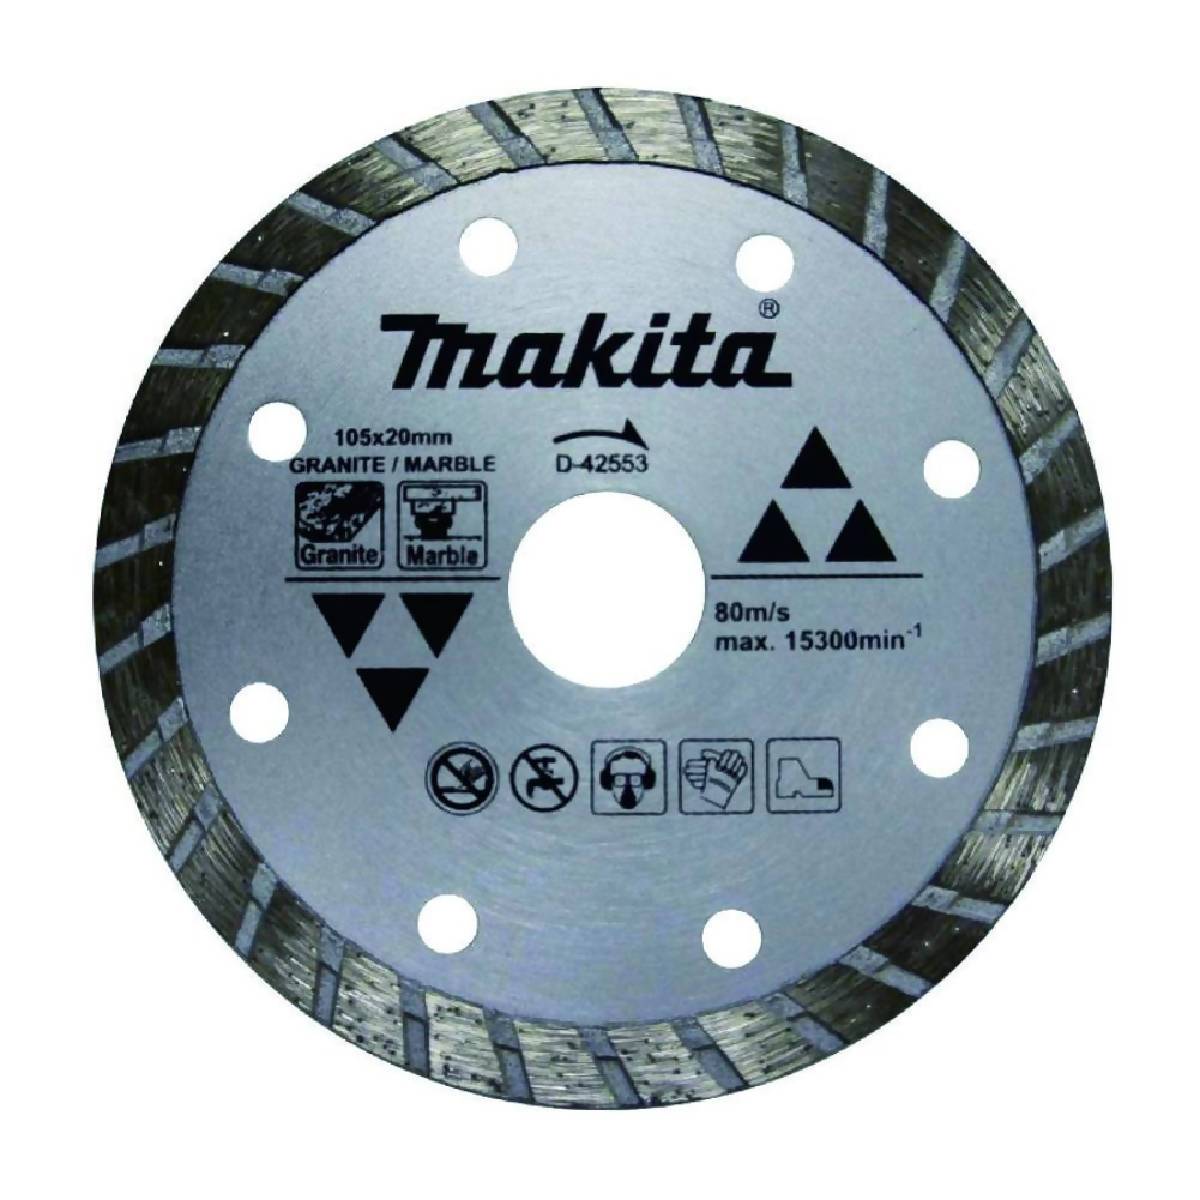 Makita D-42553 Diamond Wheel 105mm (For Granite/Marble)